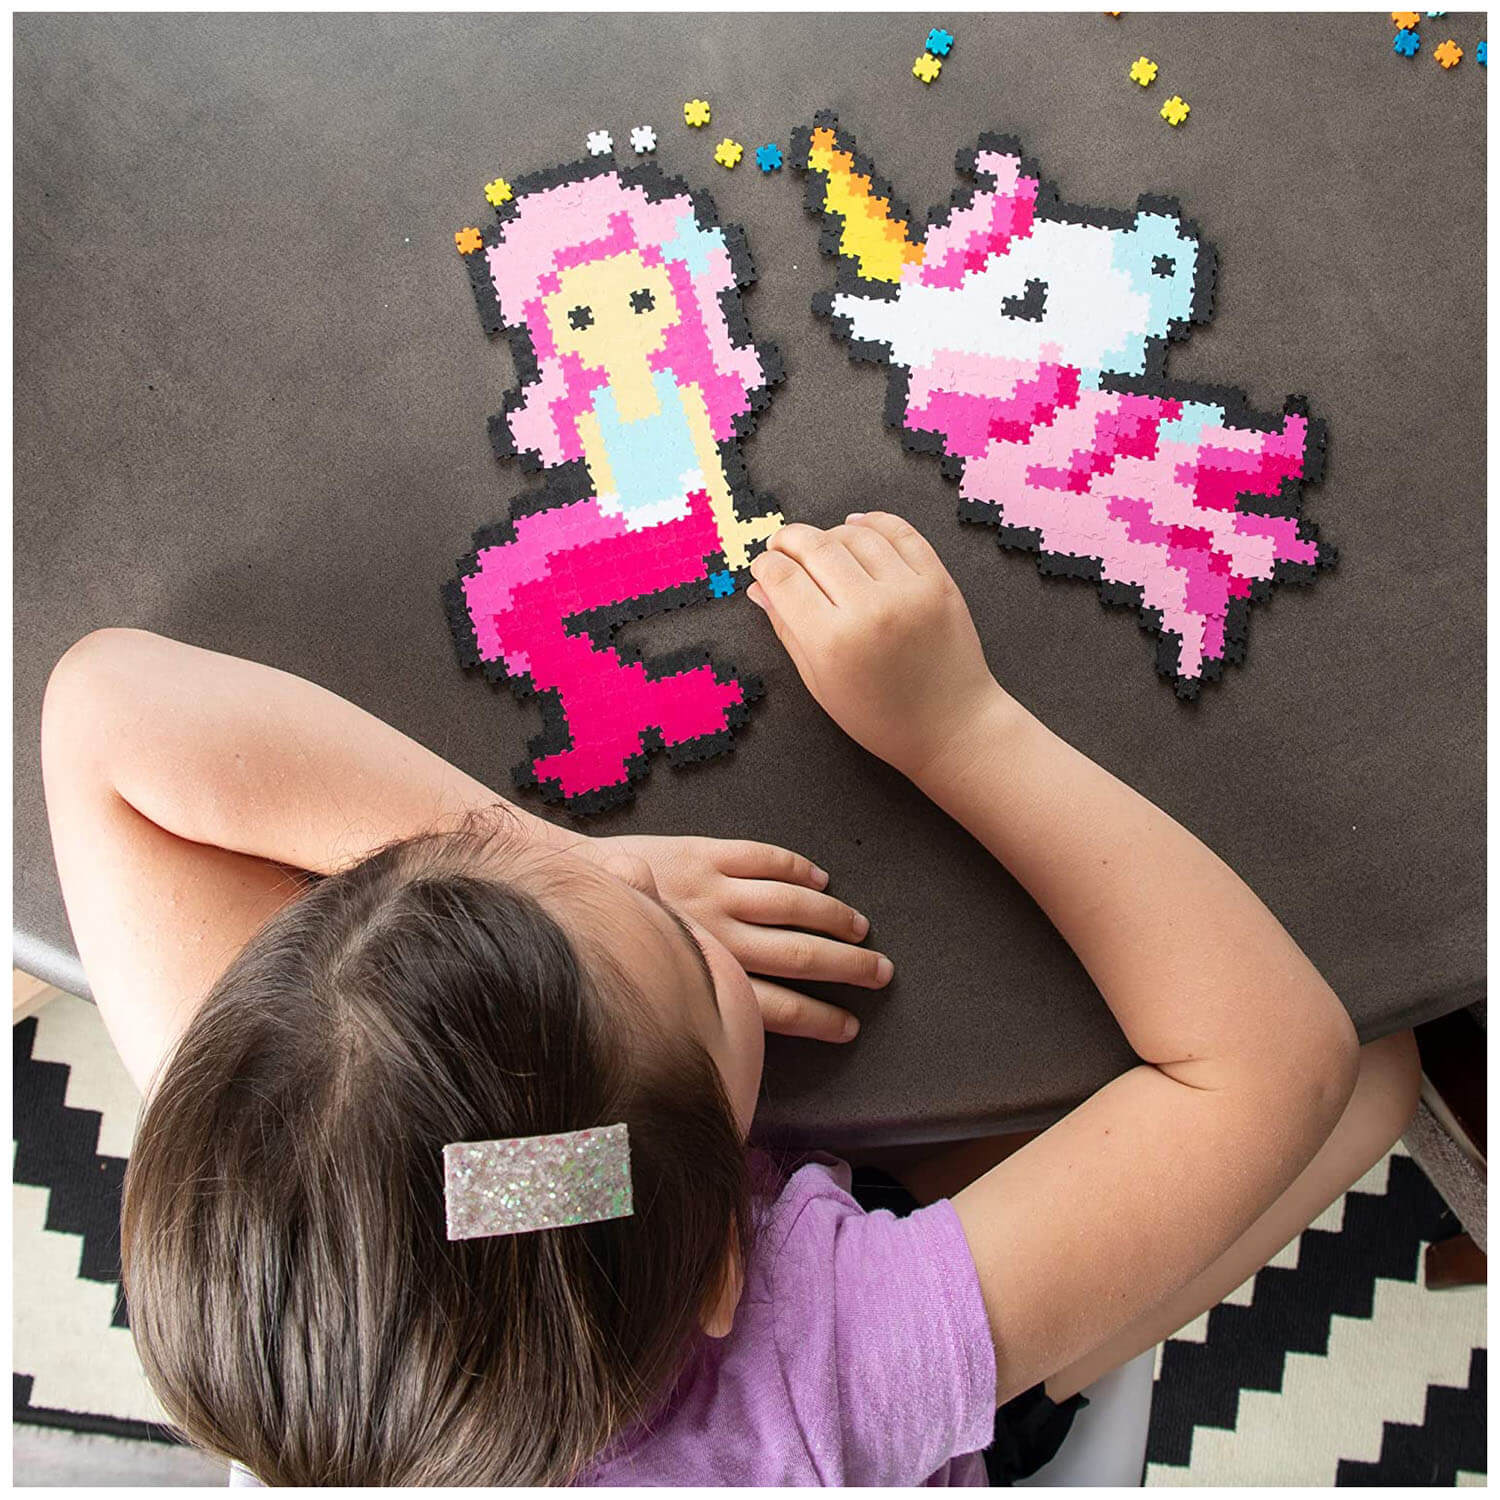 Girl building a mermaid and unicorn.